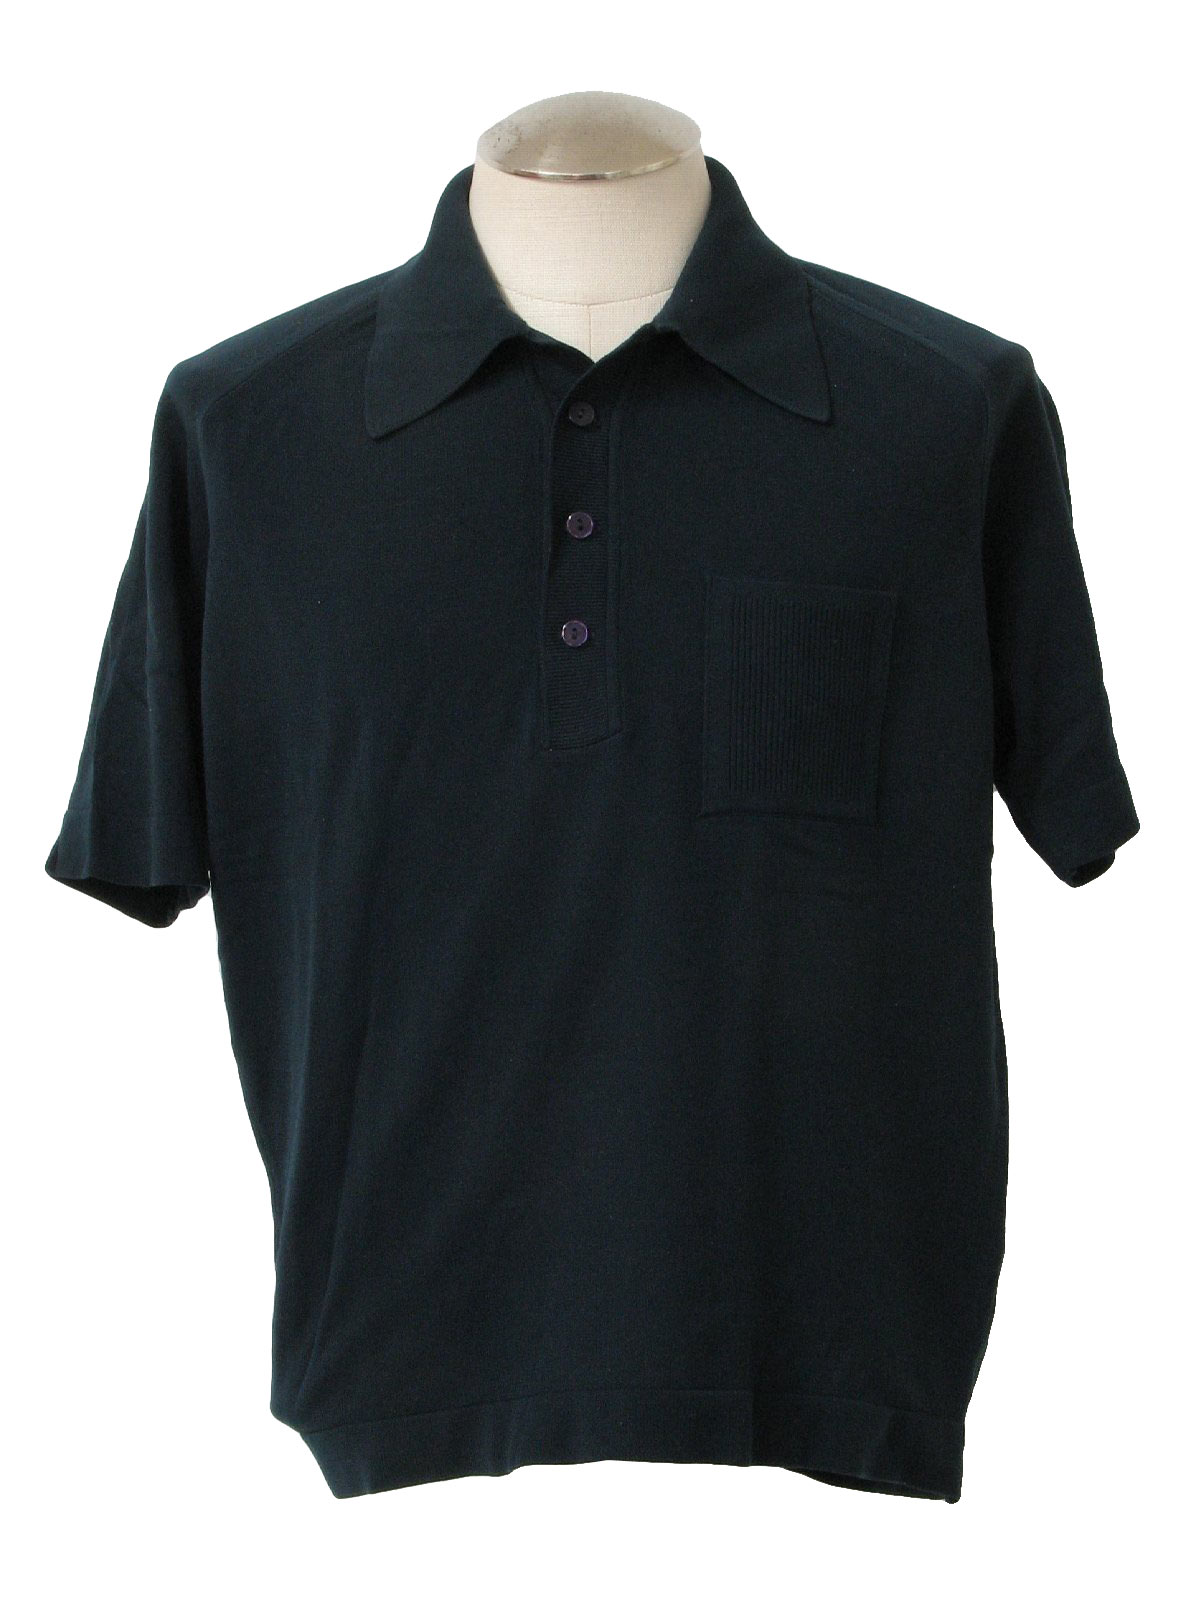 Retro 1970's Shirt (fabric label) : 70s -fabric label- Mens blue-black ...